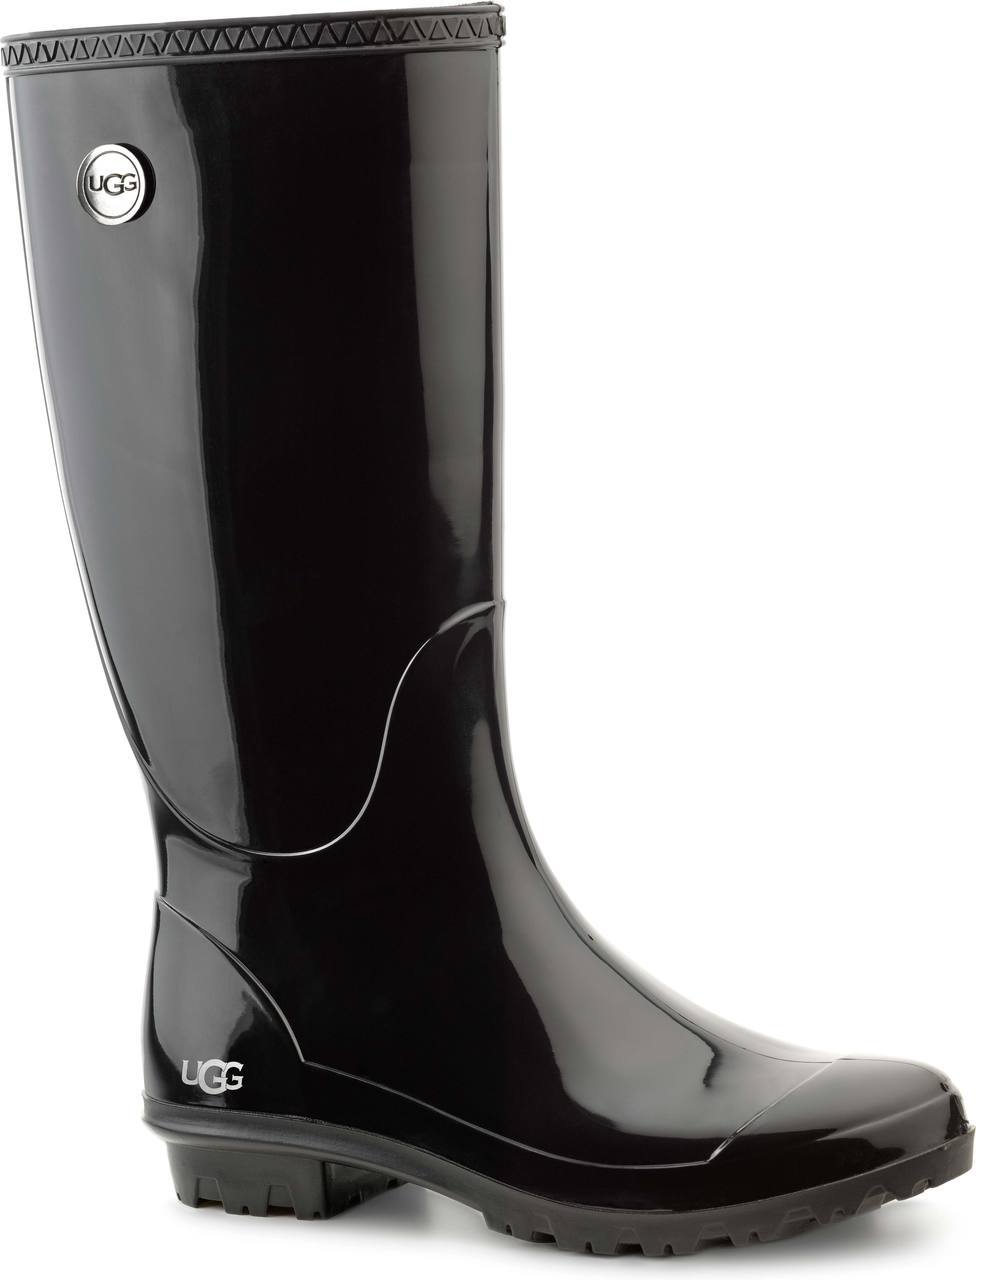 UGG Rain Boots for Fall - Englin's Fine Footwear